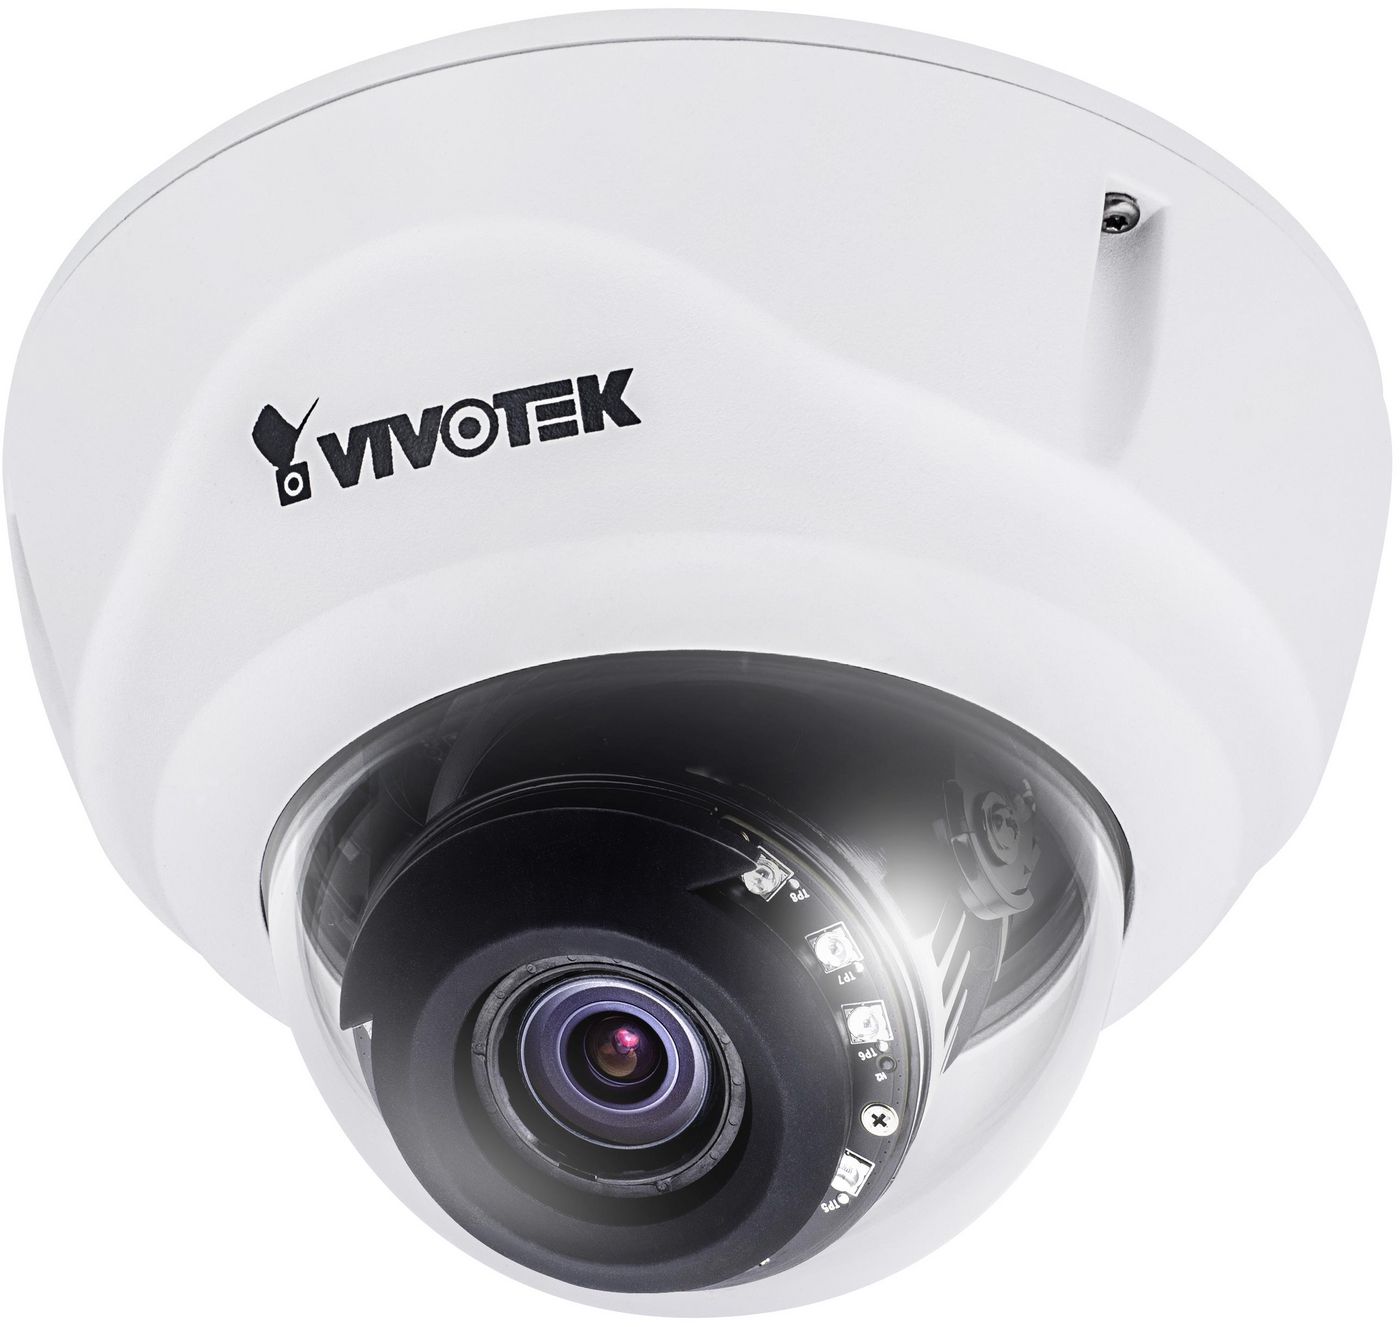 Vivotek FD836BA-HTV W128444020 Security Camera Dome Ip 